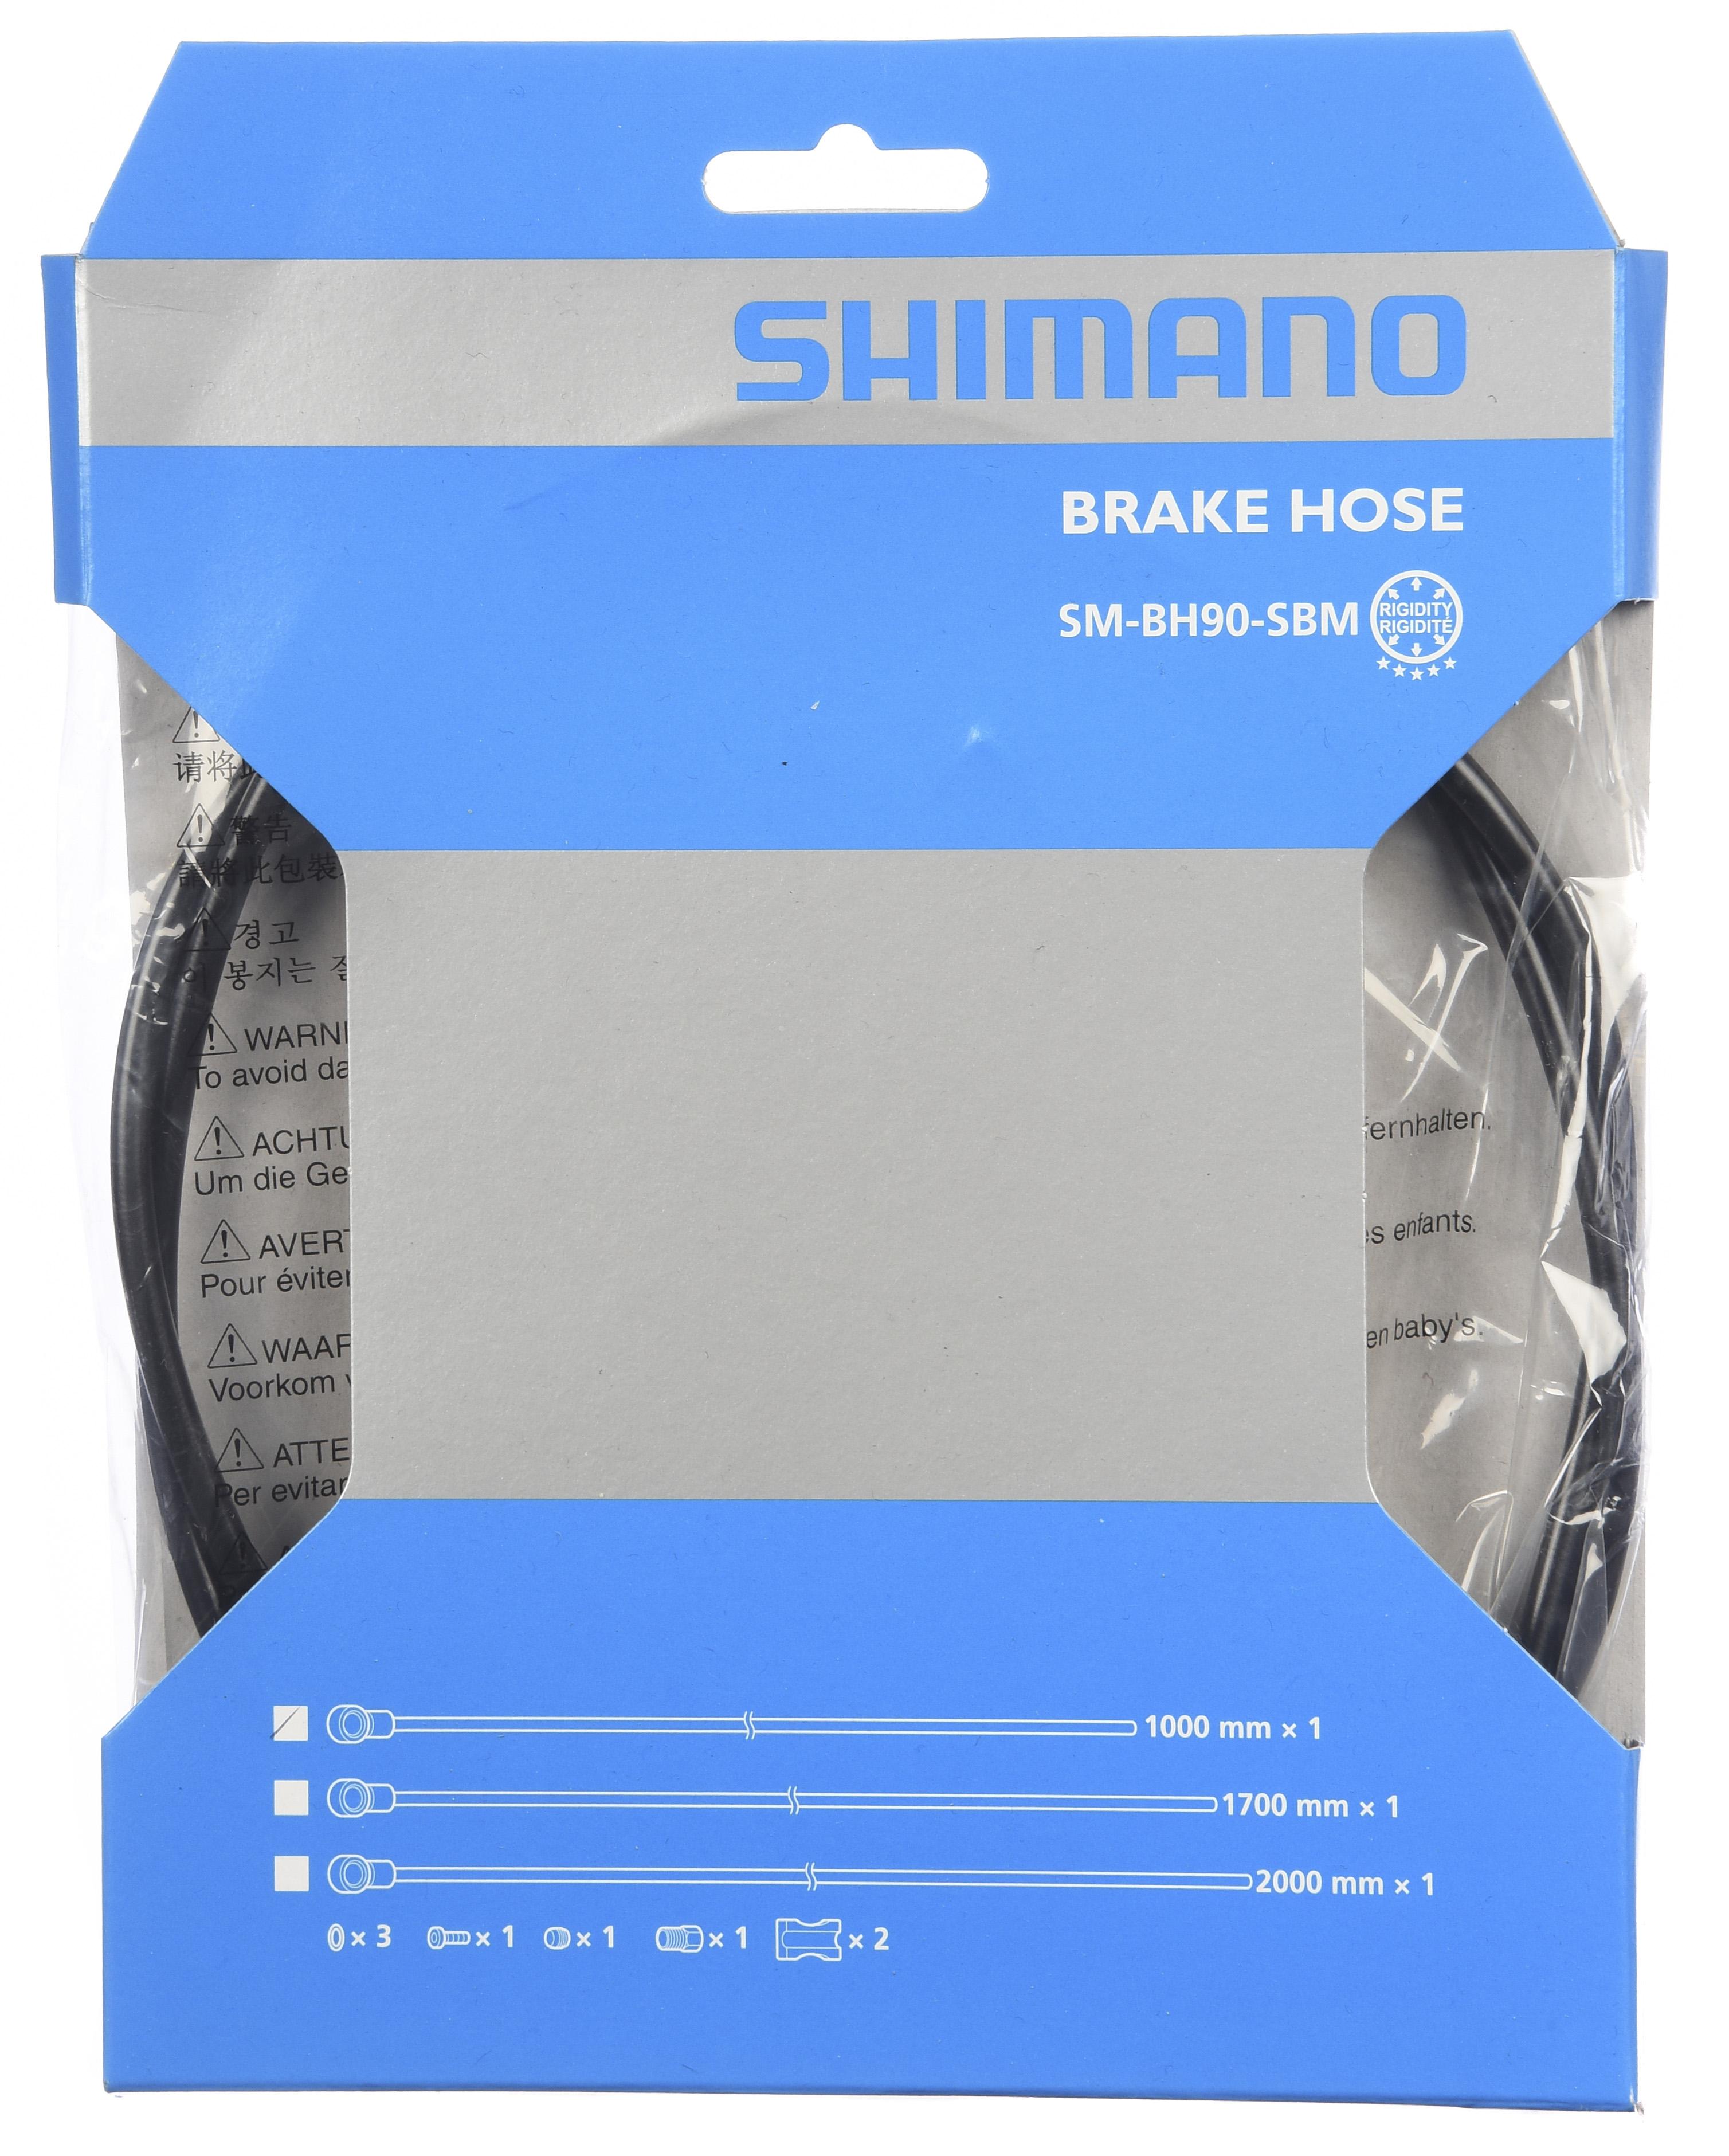 Shimano Xtr M9000-m9020-m987 Disc Brake Hose - Black